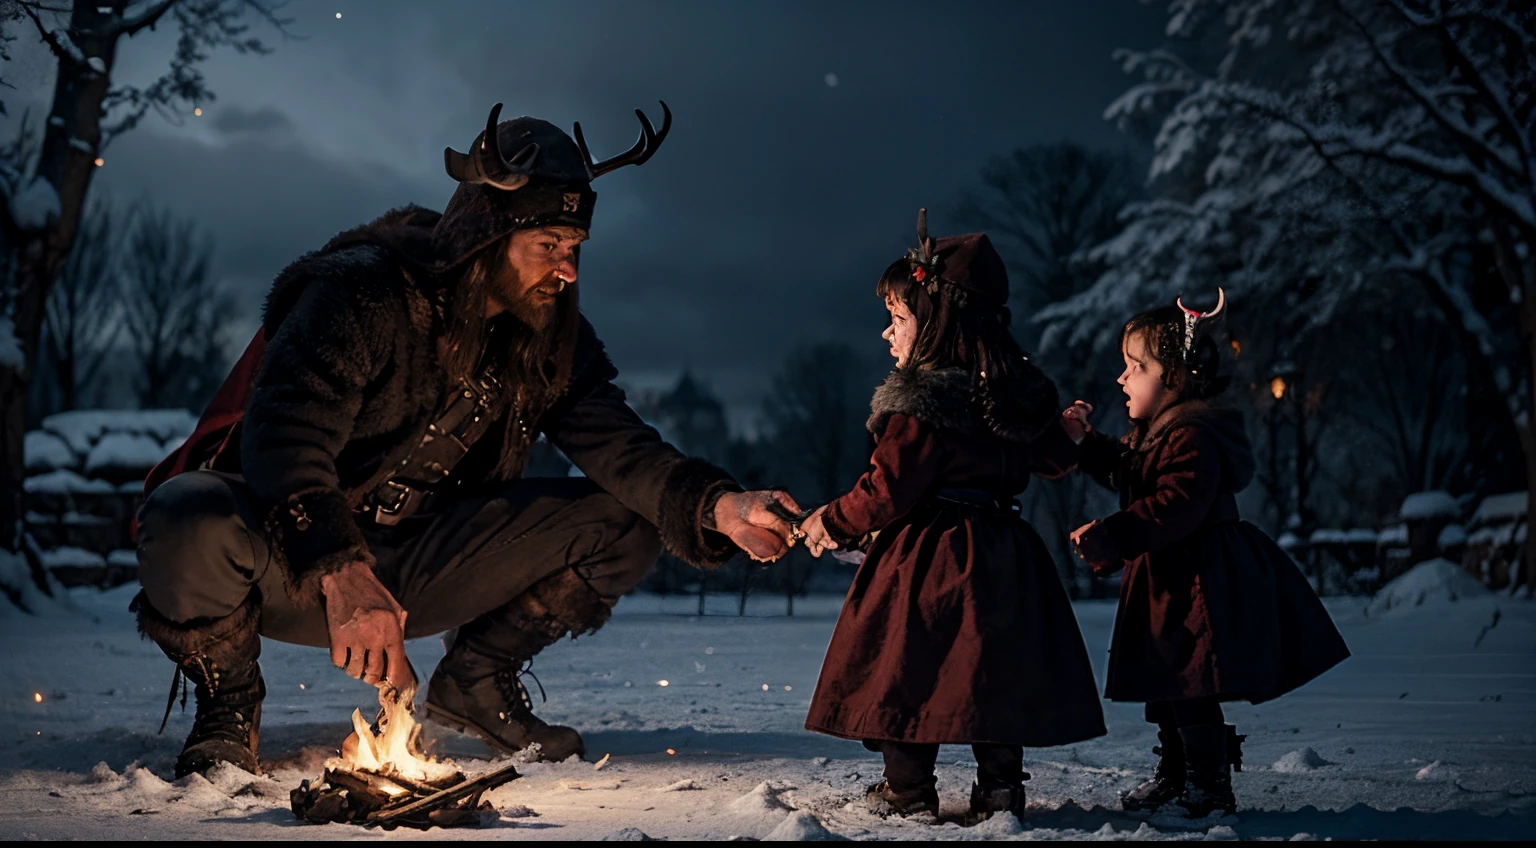 Demon threatening kids, winter fairytale atmosphere, yule, epic concept art illustration, viking